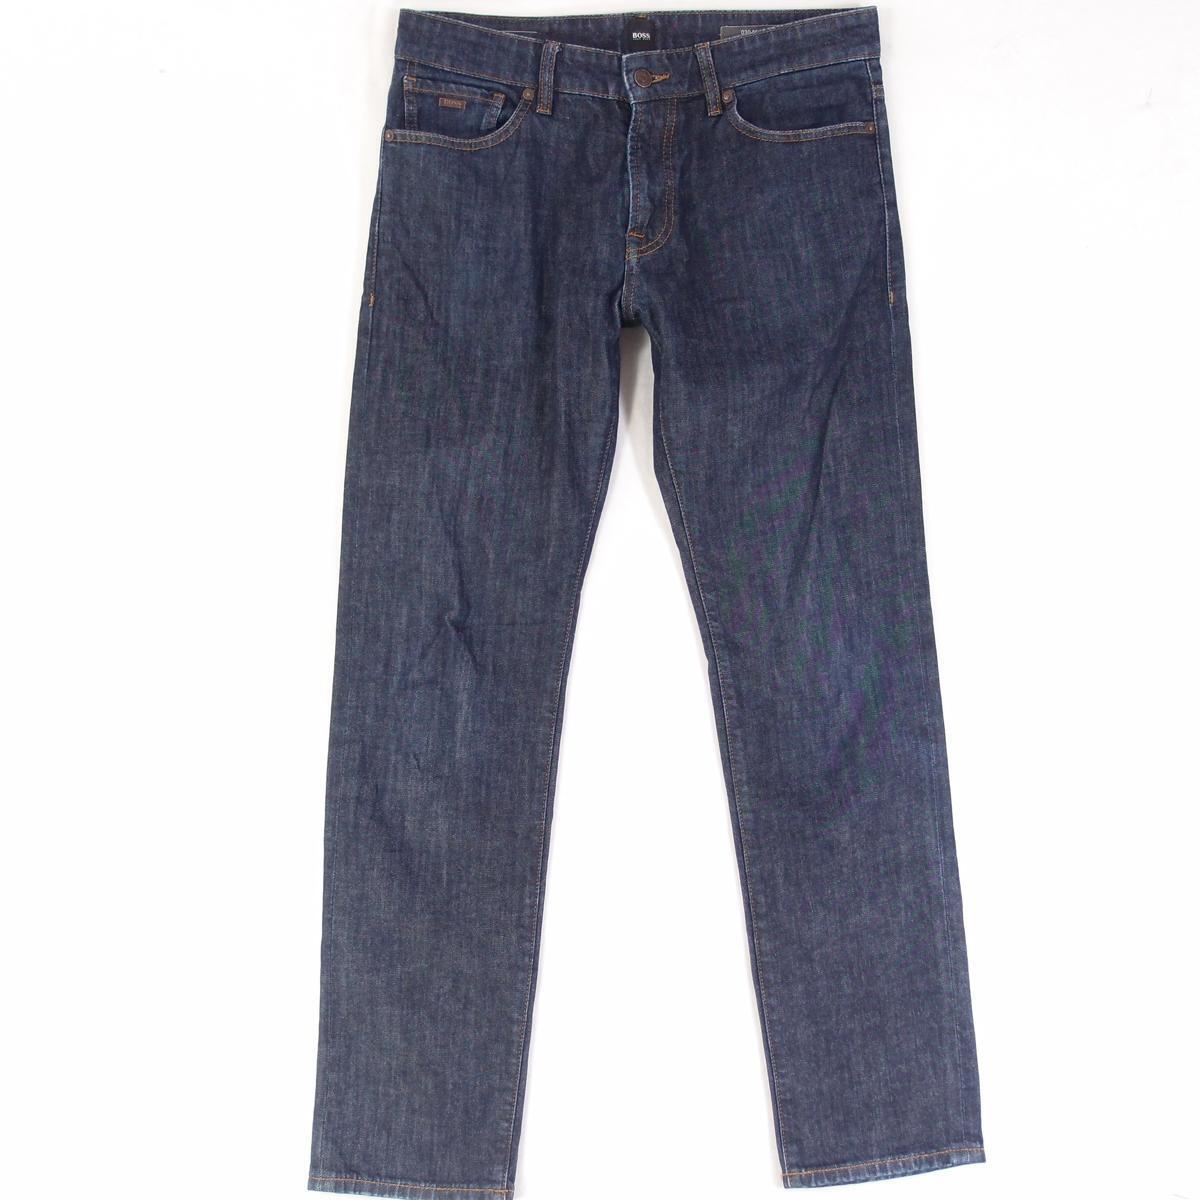 Mens HUGO BOSS 030 MAINE Stretch Straight Blue Jeans W33 L32 | eBay